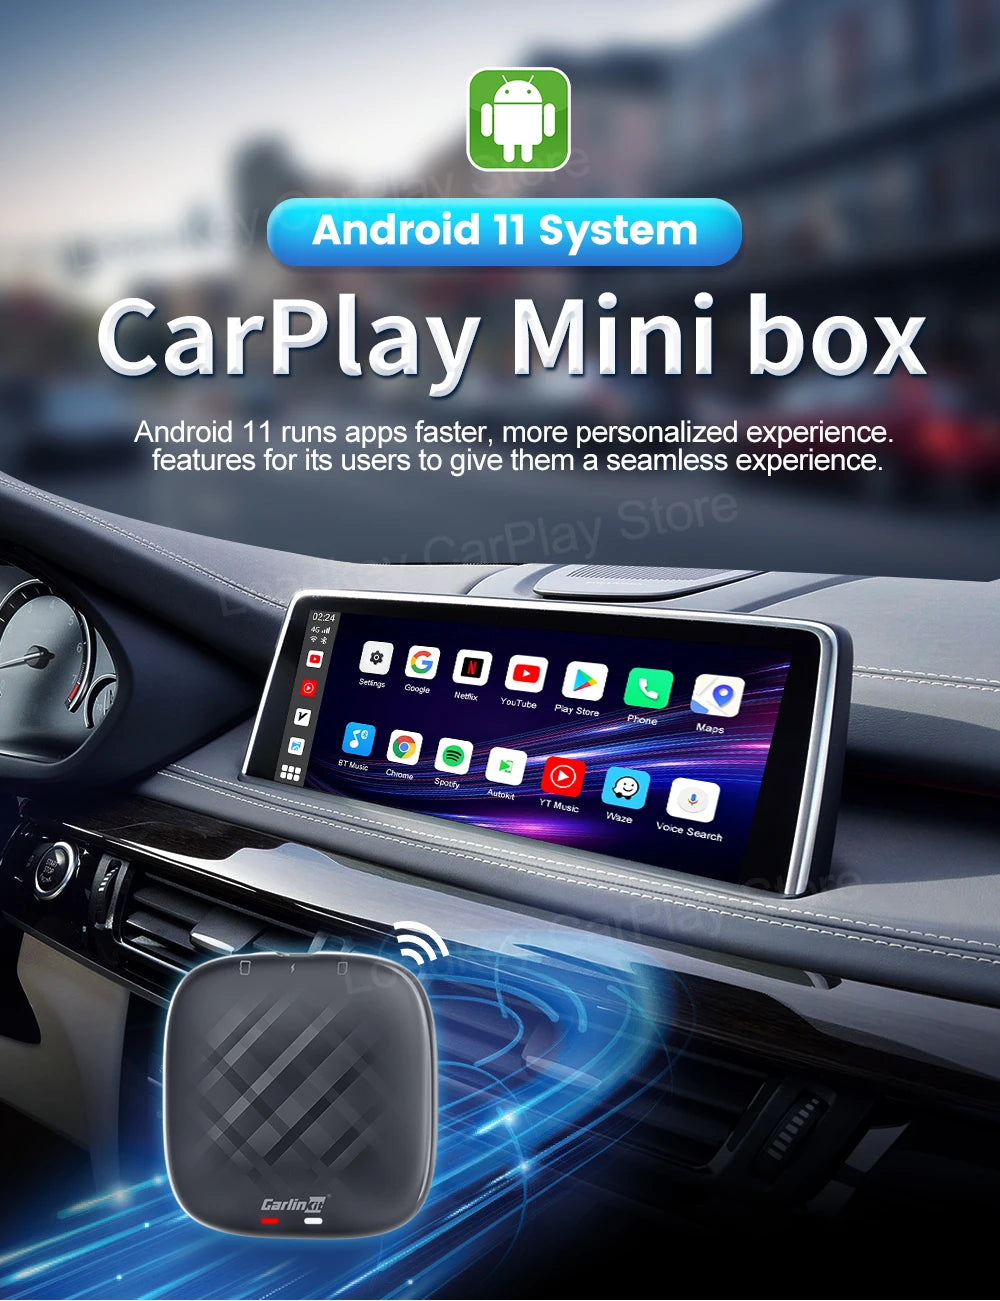 Carlinkit 5 CarPlay Mini Ai Box Wireless CarPlay Wireless Android Auto For Audi Benz Mazda Toyota and other cars For Netflix YouTube 4G LTE GPS